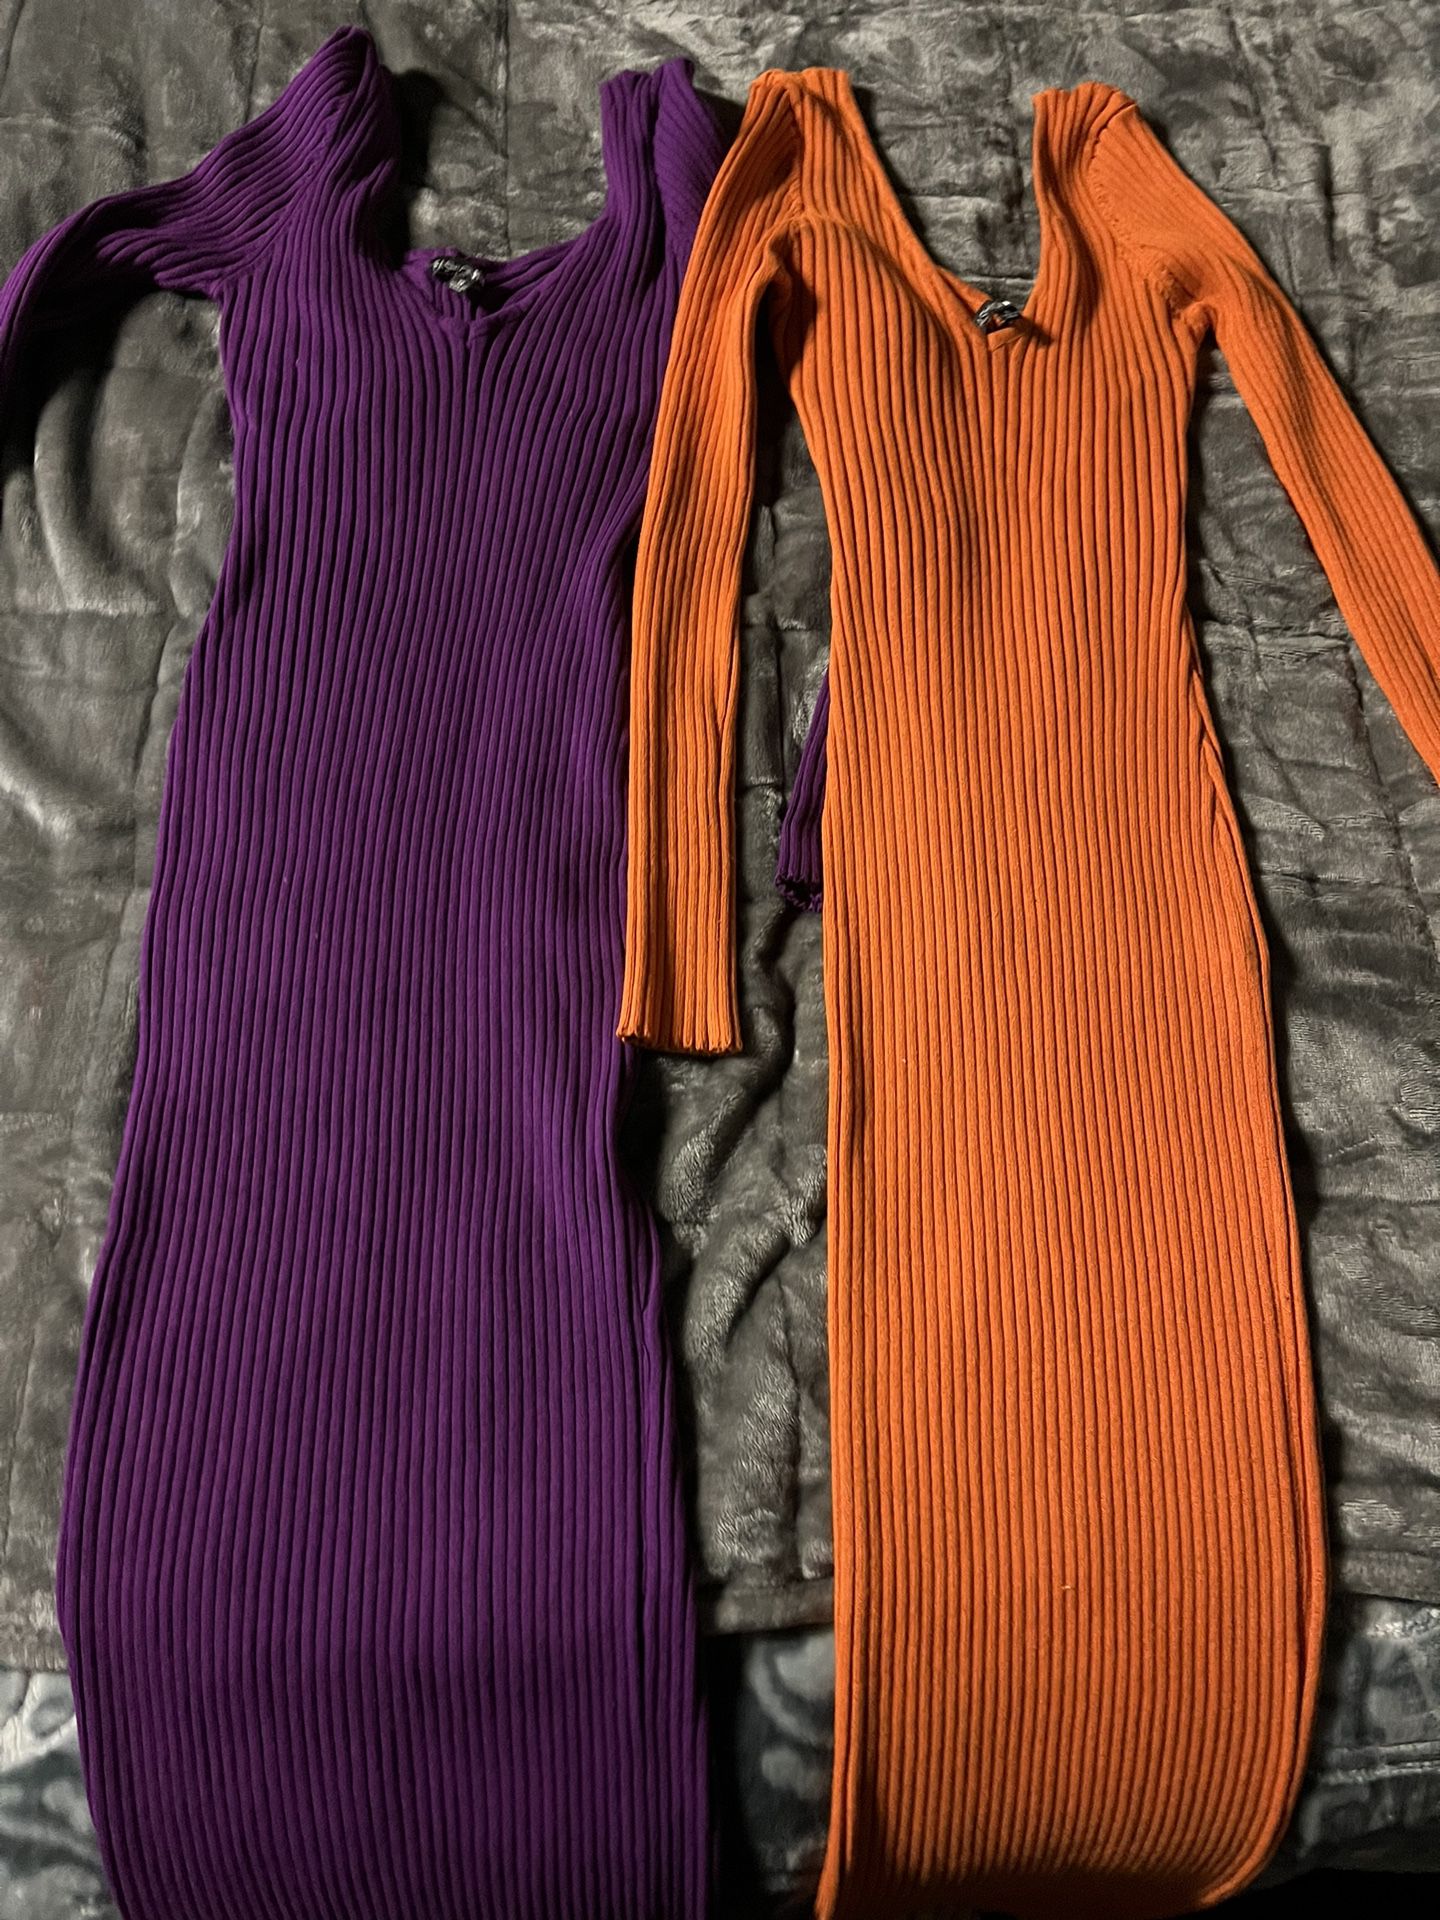 Fashion Nova. Midi Purple And Brown Large Size Dress. 